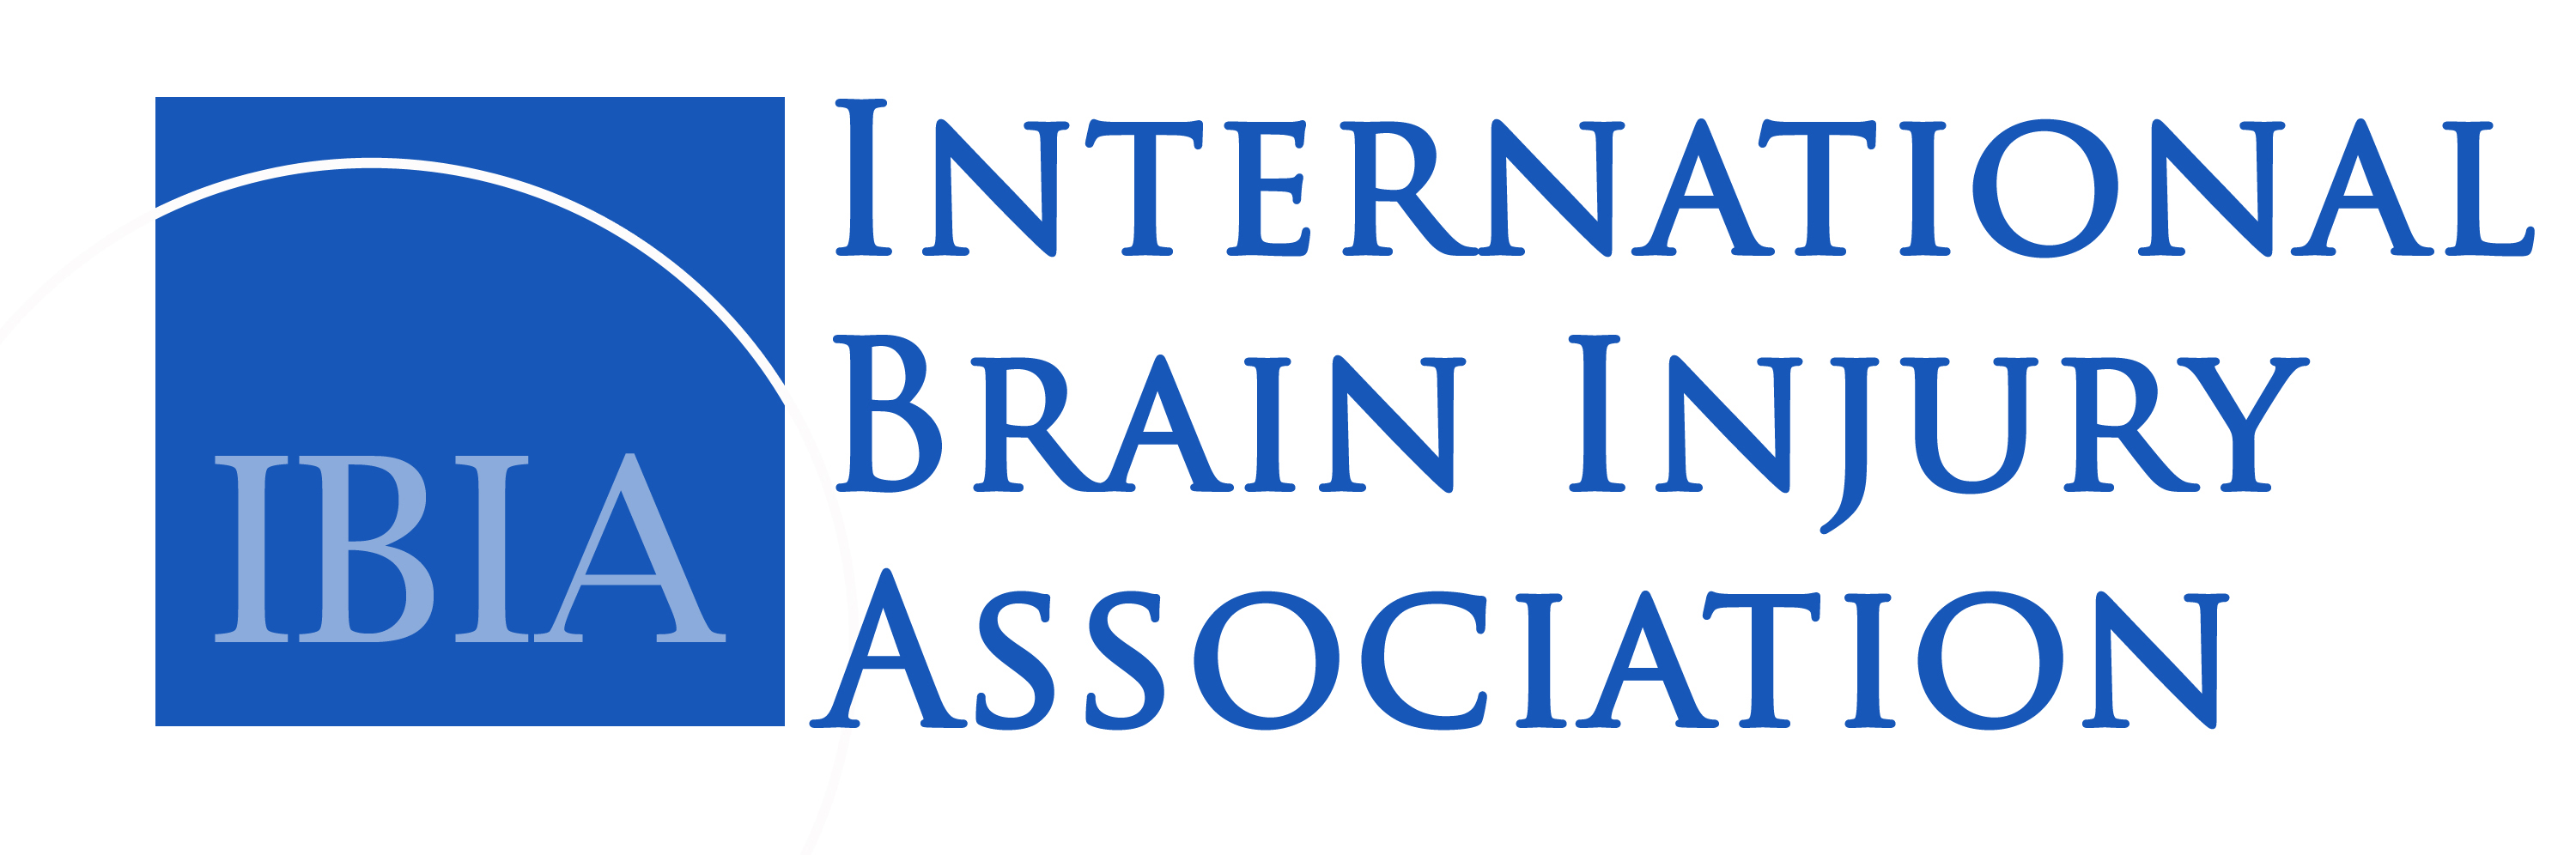 International Brain Injury Association